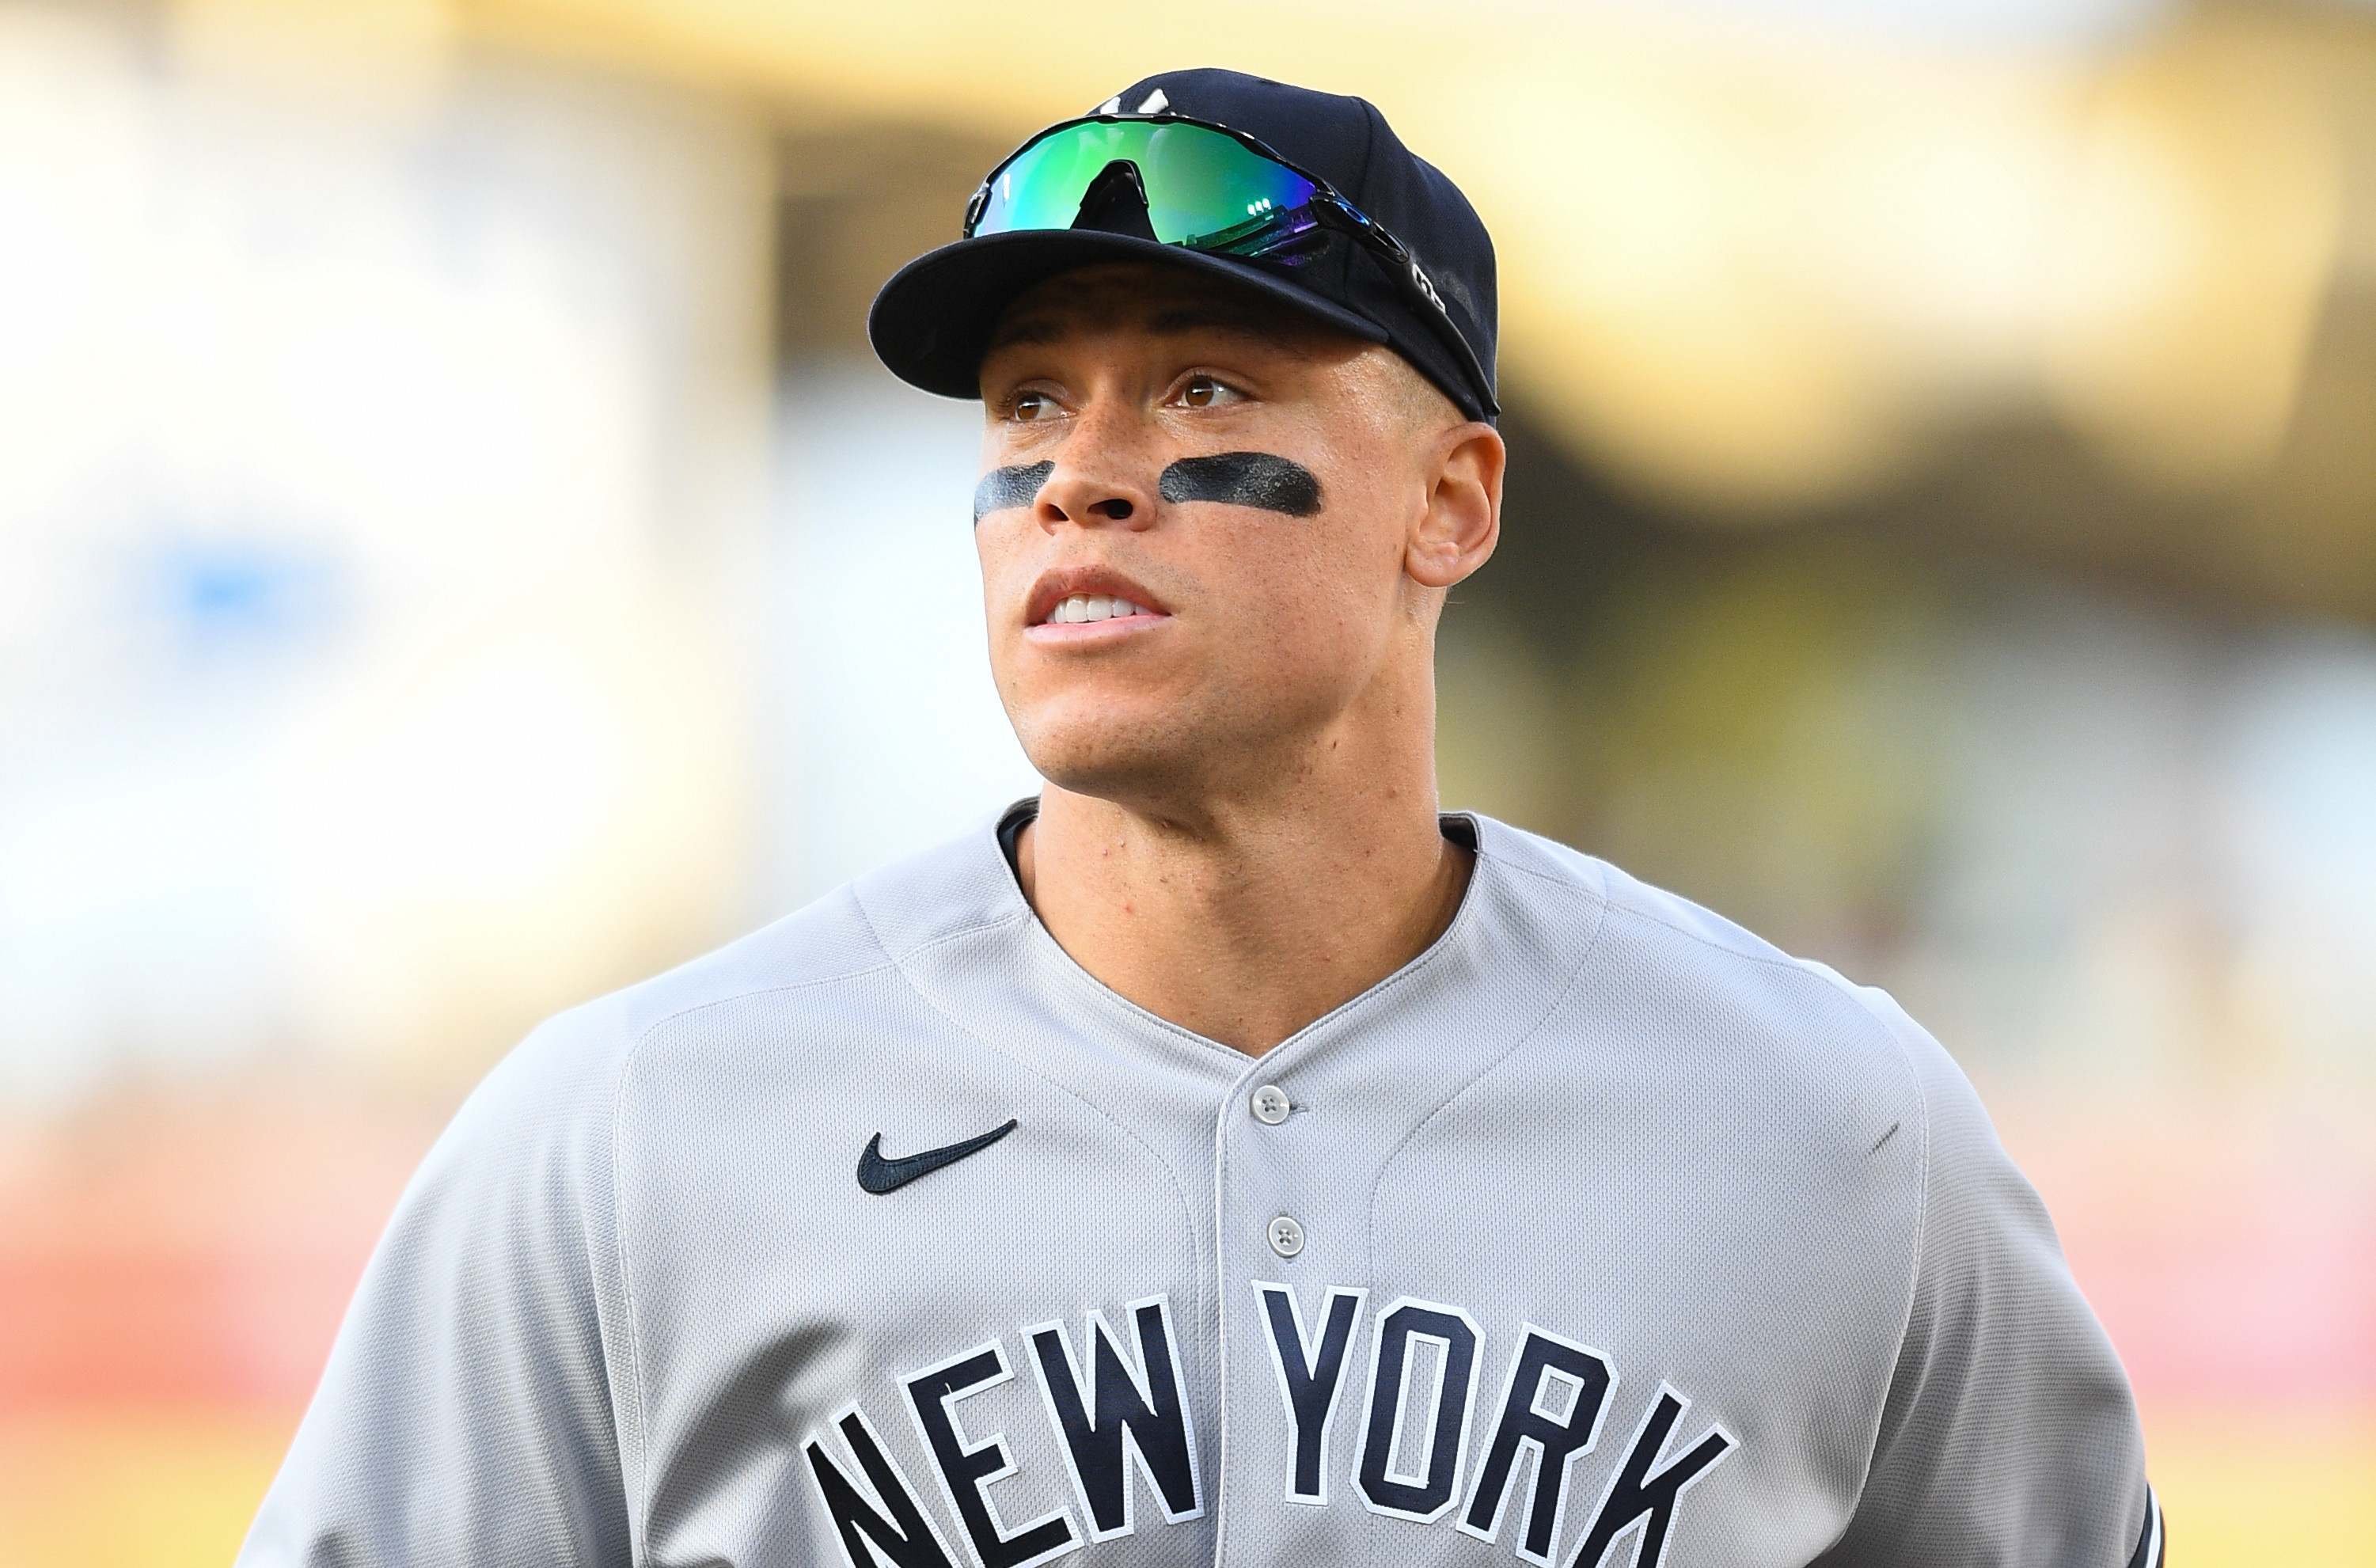 New York Yankees Star Aaron Judge Is Now a Jordan Brand Athlete